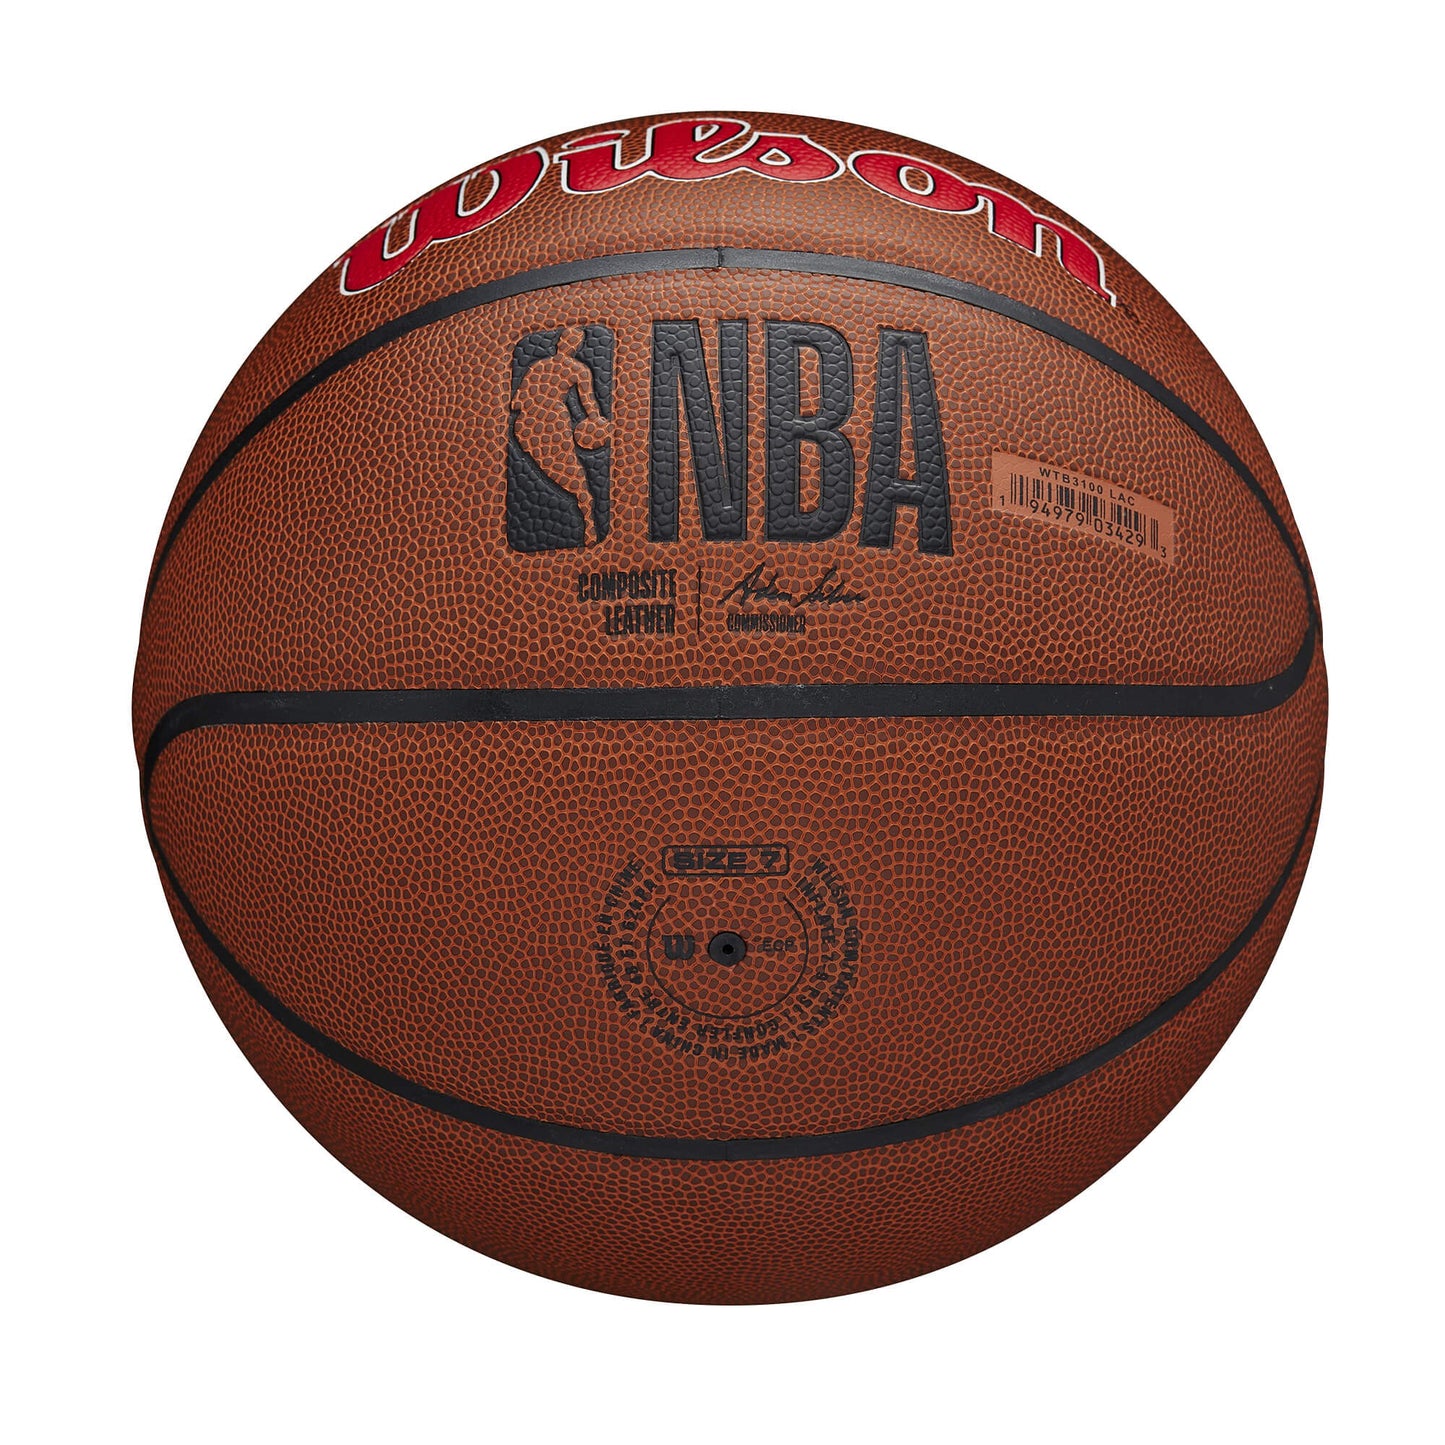 Wilson NBA Team Alliance Composite Basketball Los Angeles Clippers (sz. 7)